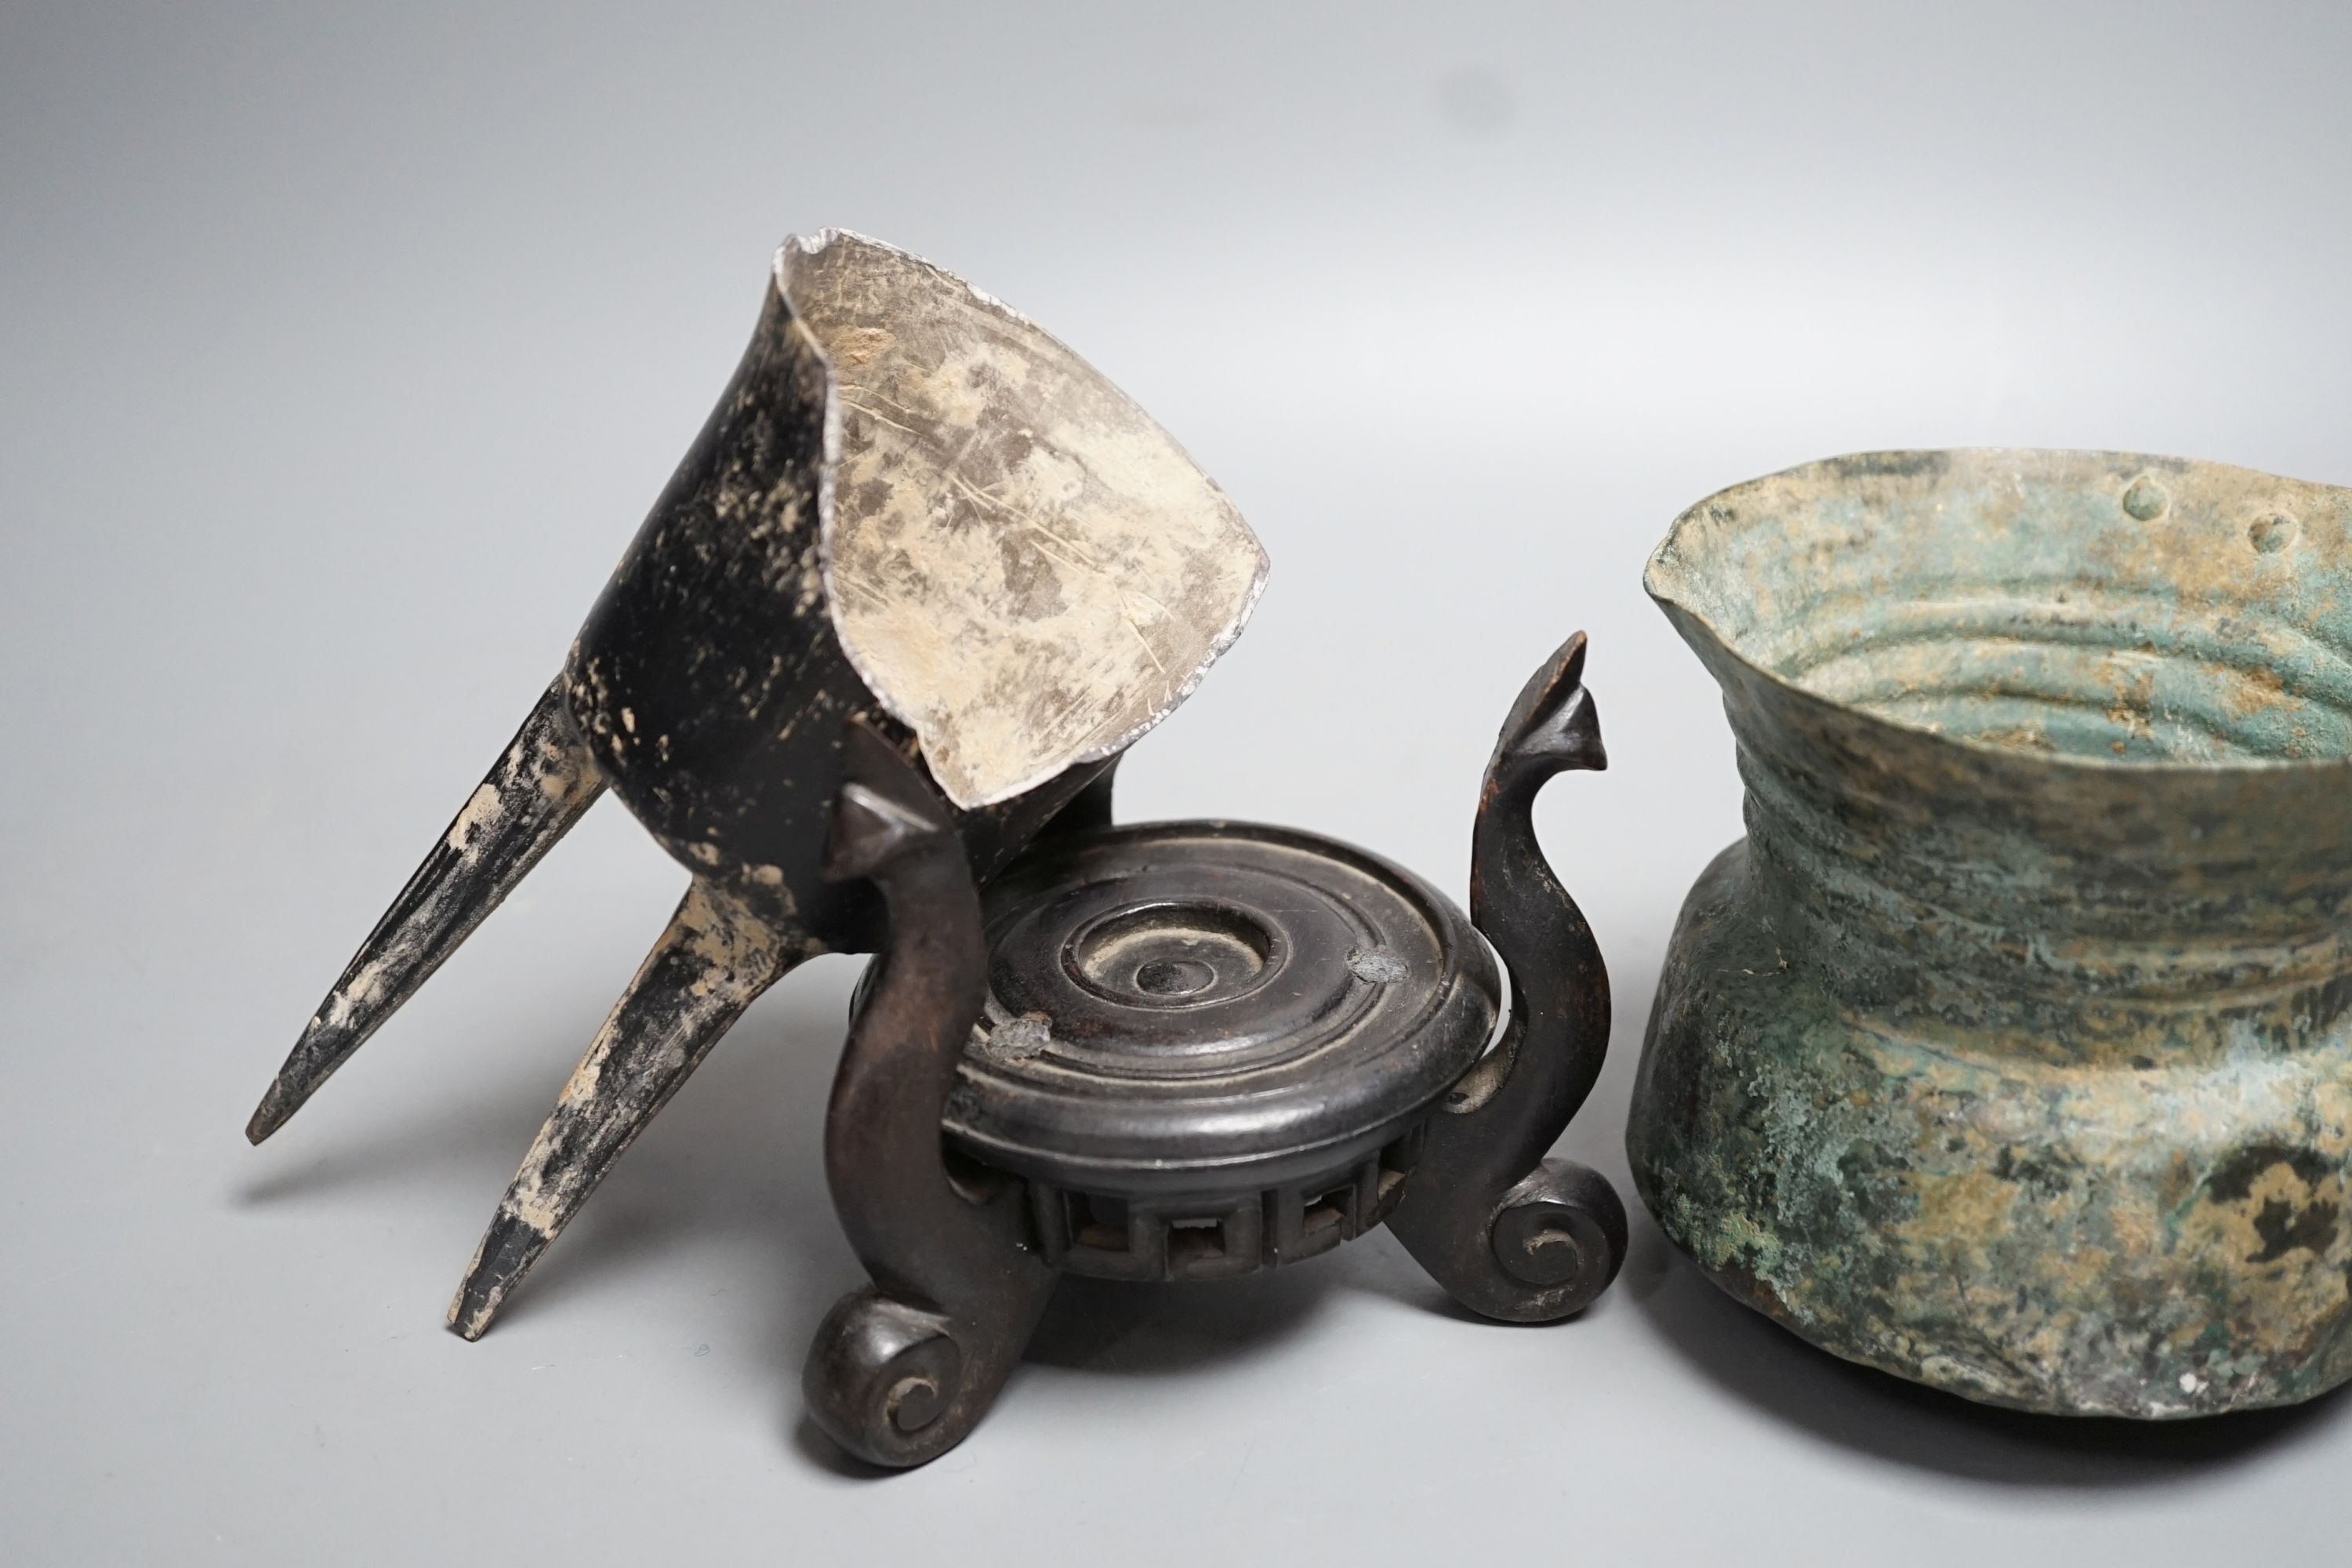 A Han dynasty pottery tripod vessel and a Roman jug